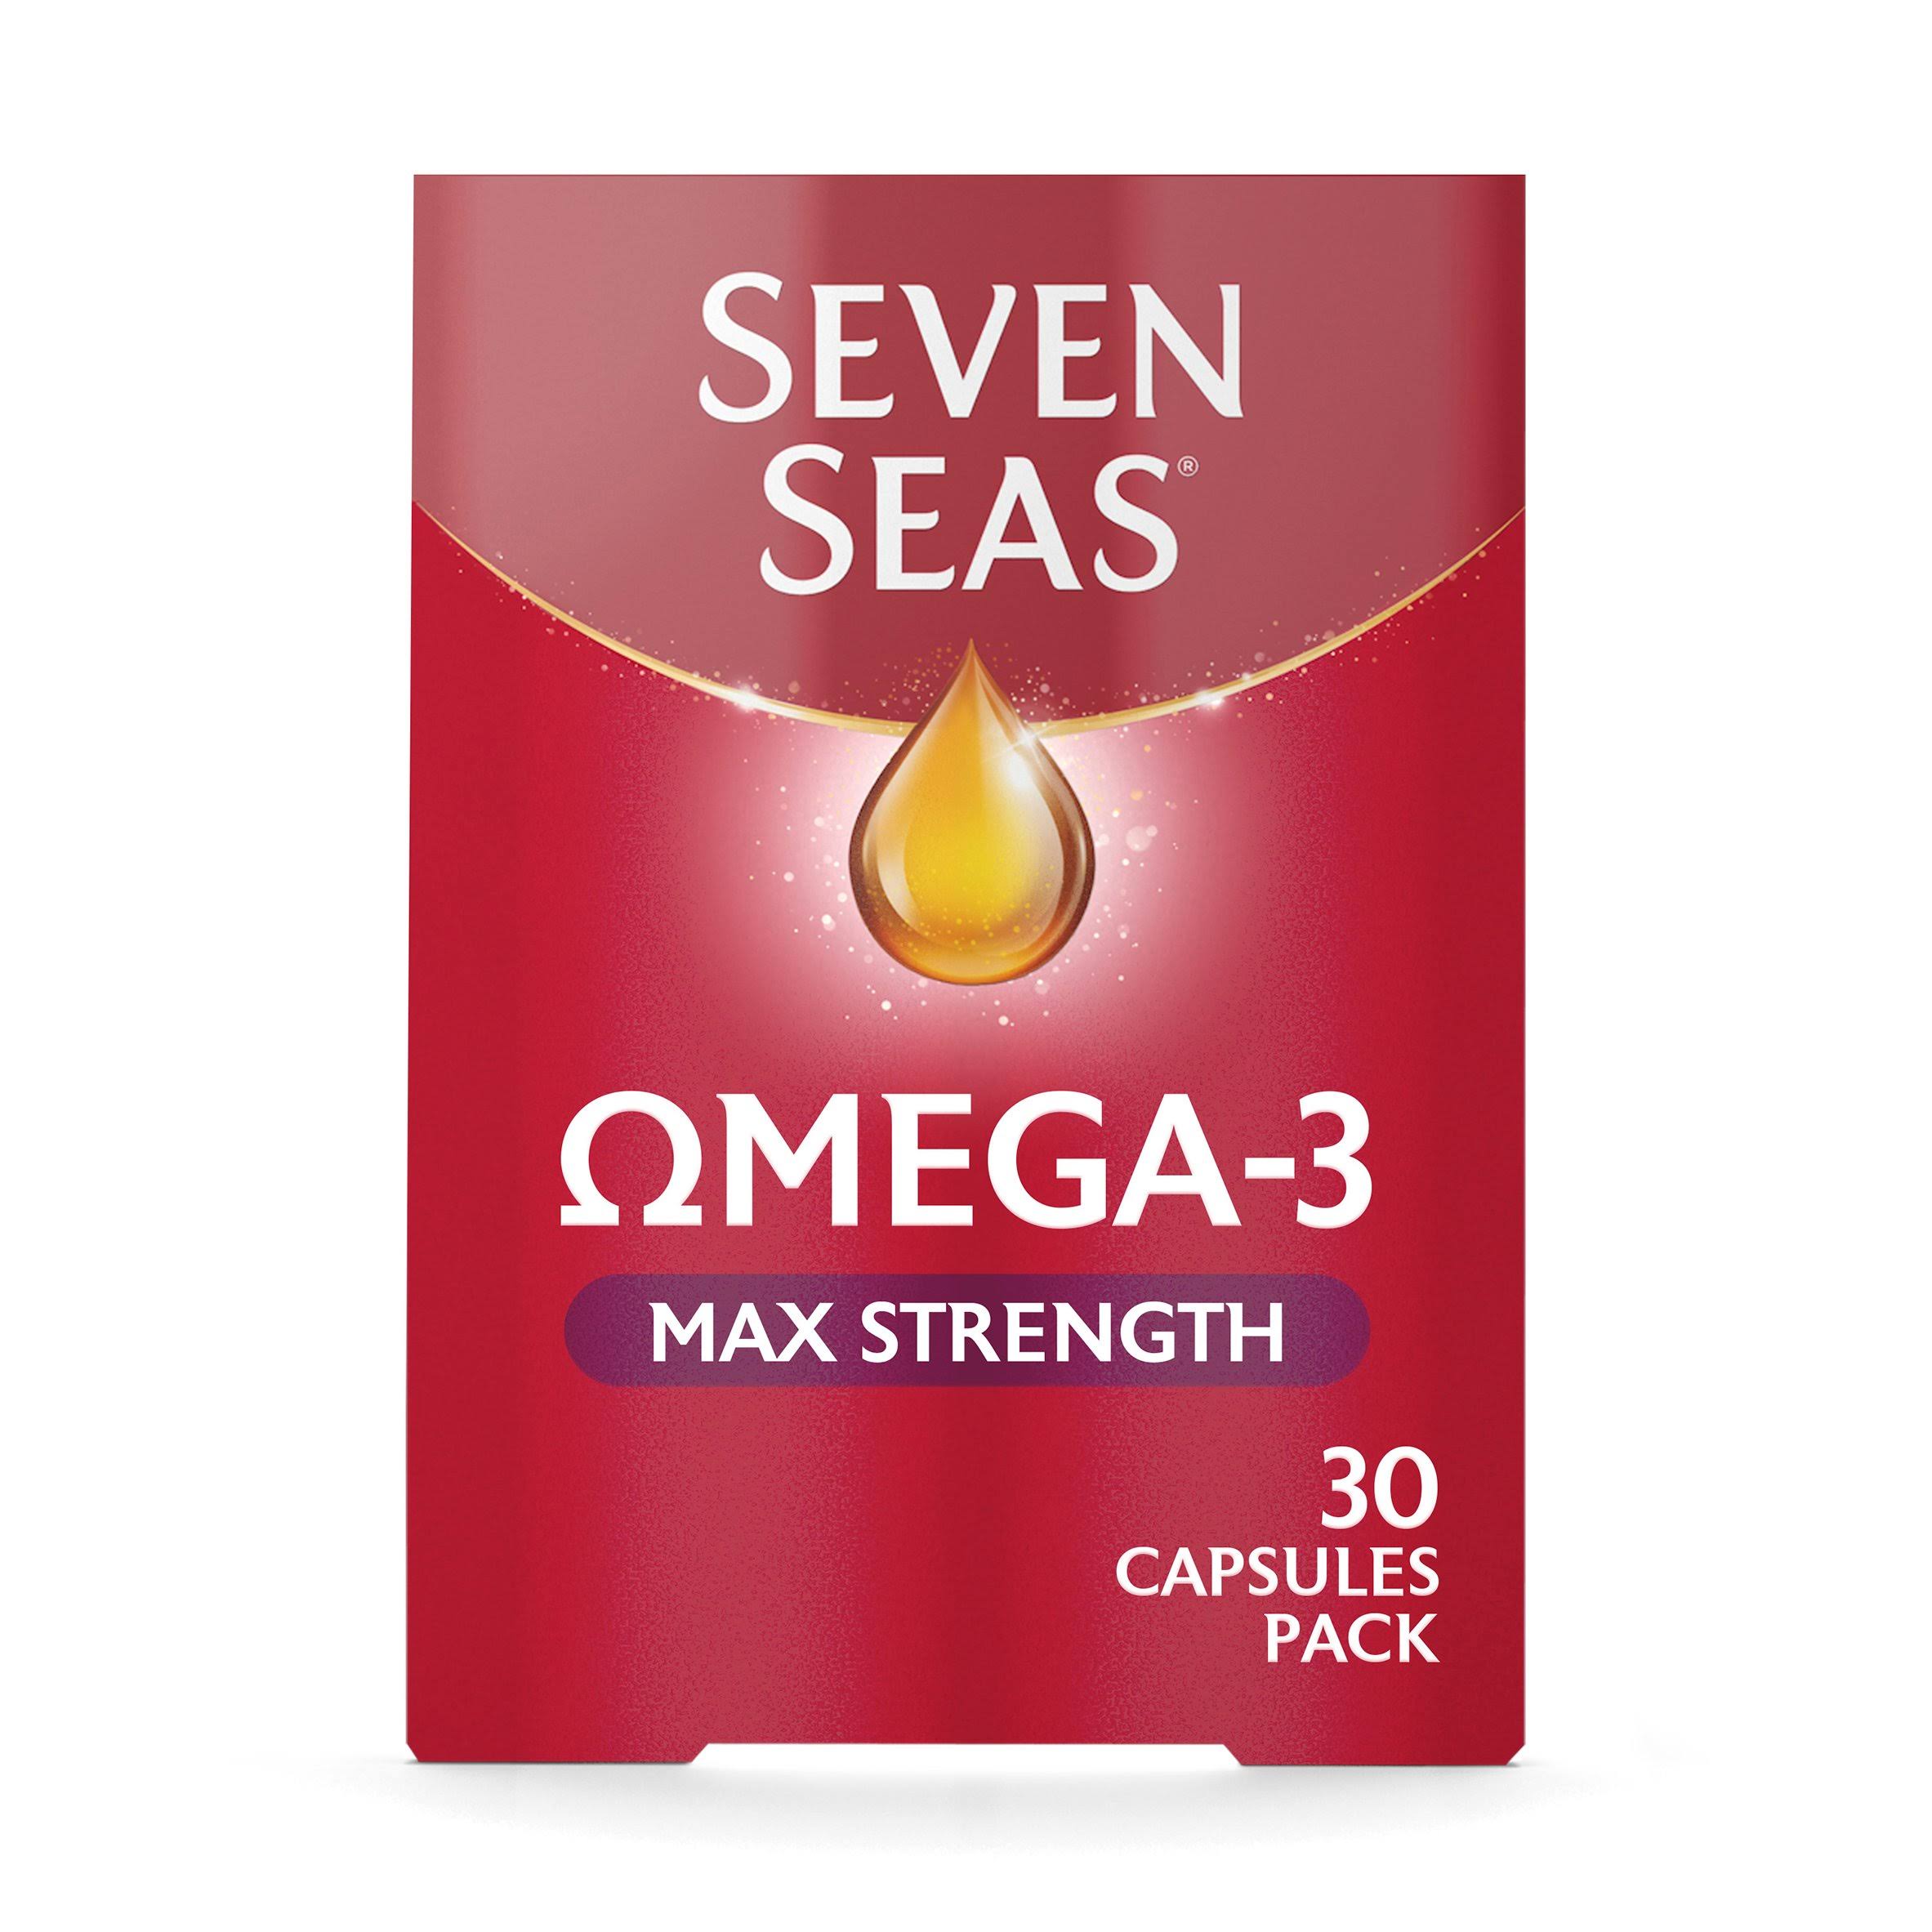 Seven Seas Omega-3 Fish Oil Max Strength - 30 Capsules